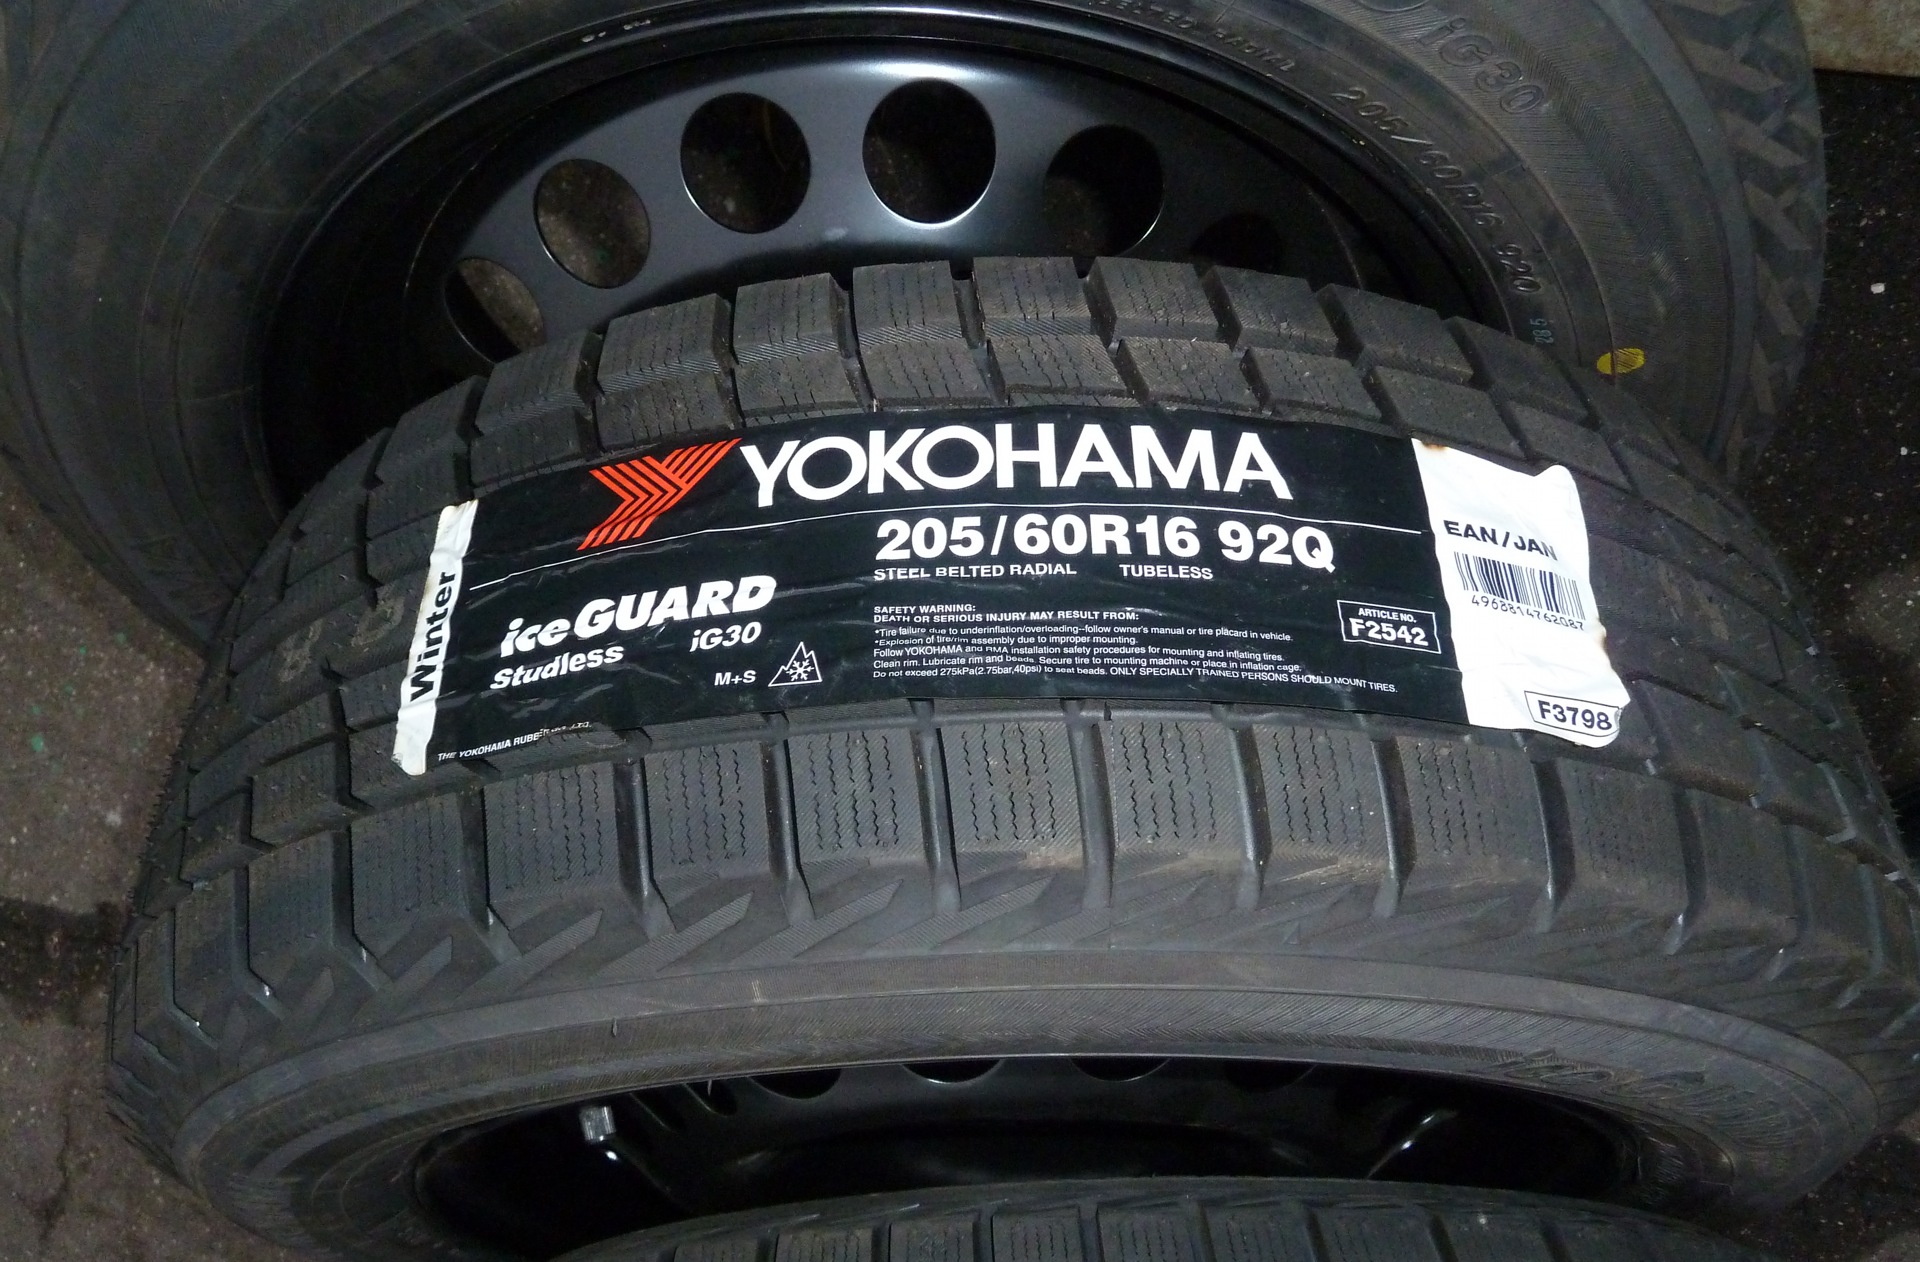 Yokohama 205 60 r16 купить. Yokohama Ice Guard ig30 205/60 r16 92q. Yokohama Ice Guard 205/60 r16. Yokohama 205/60 r16. Якохама шины 205/60/16.